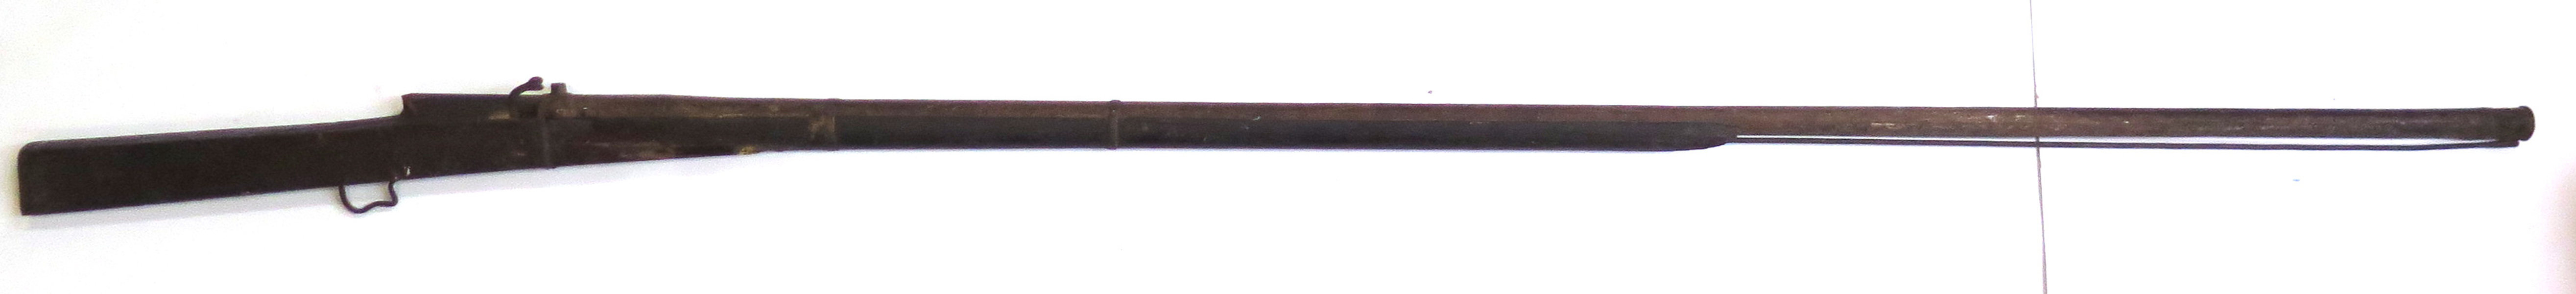 Toradar, smide med trästock, Indien, 18-1900-tal, luntlåsmekanism, _14005a_lg.jpeg